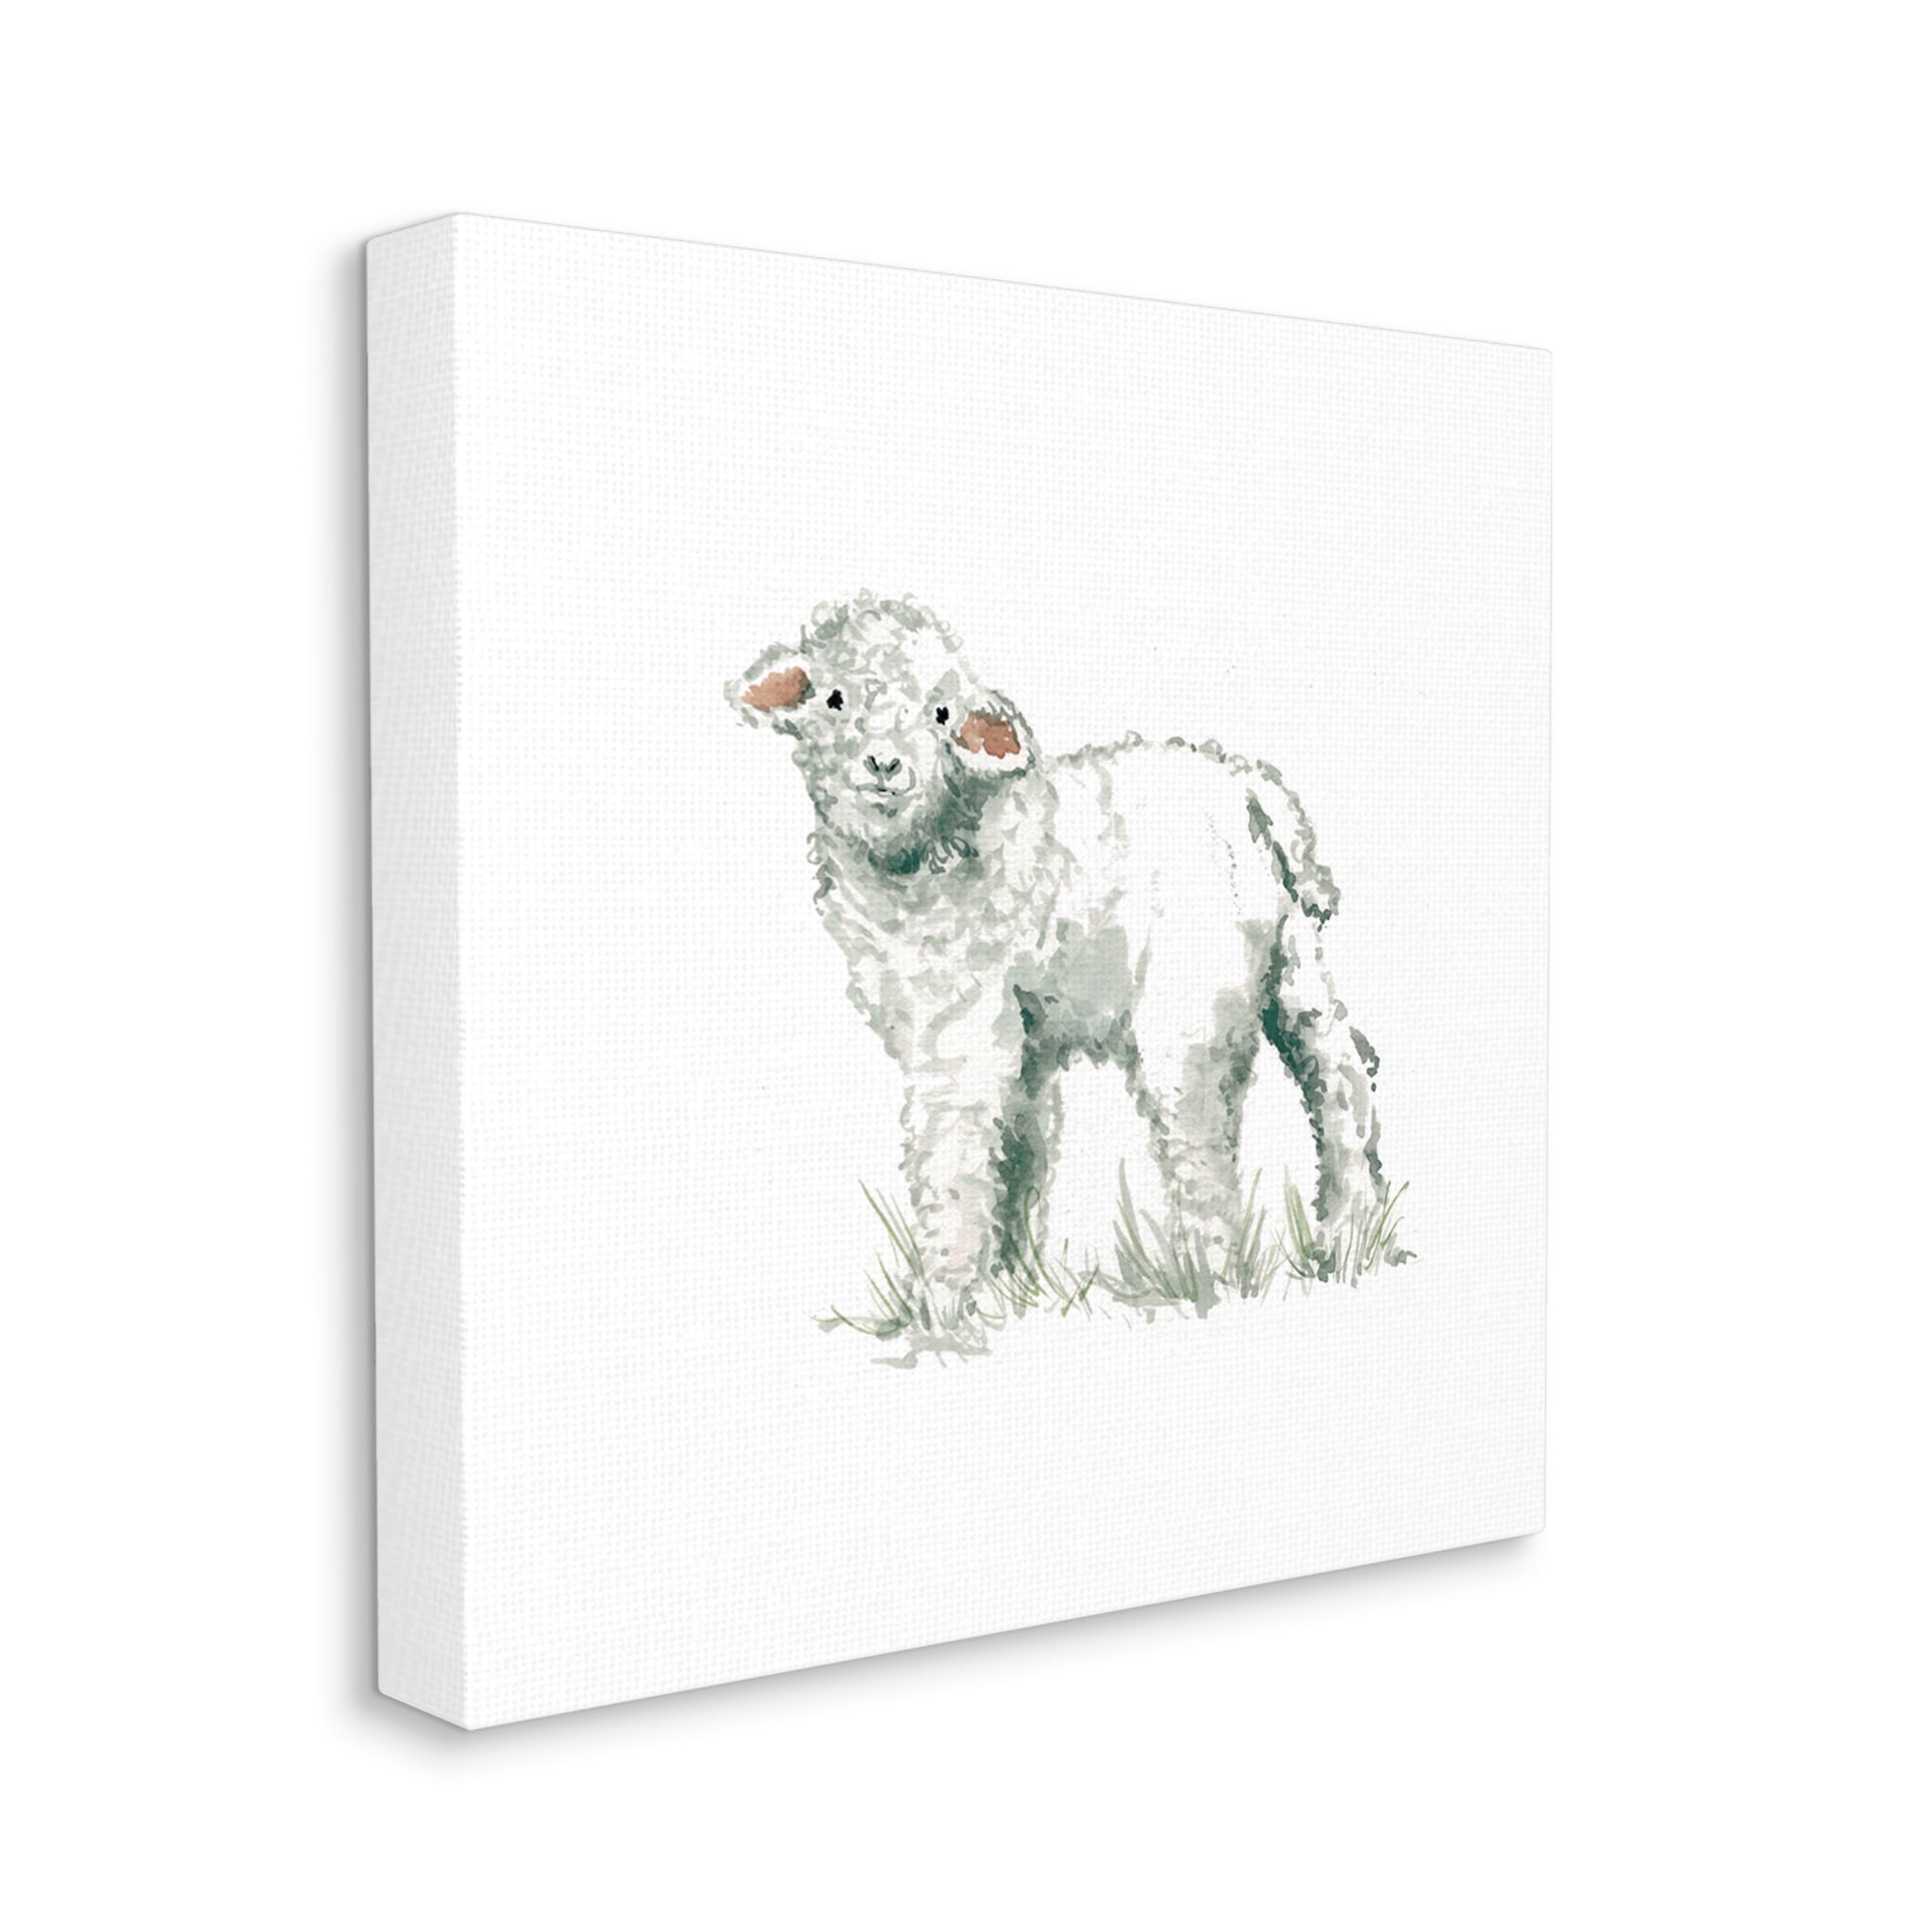 Primitive Folk Art  Proverbs Sheep Print on Canvas Board 5x7""  